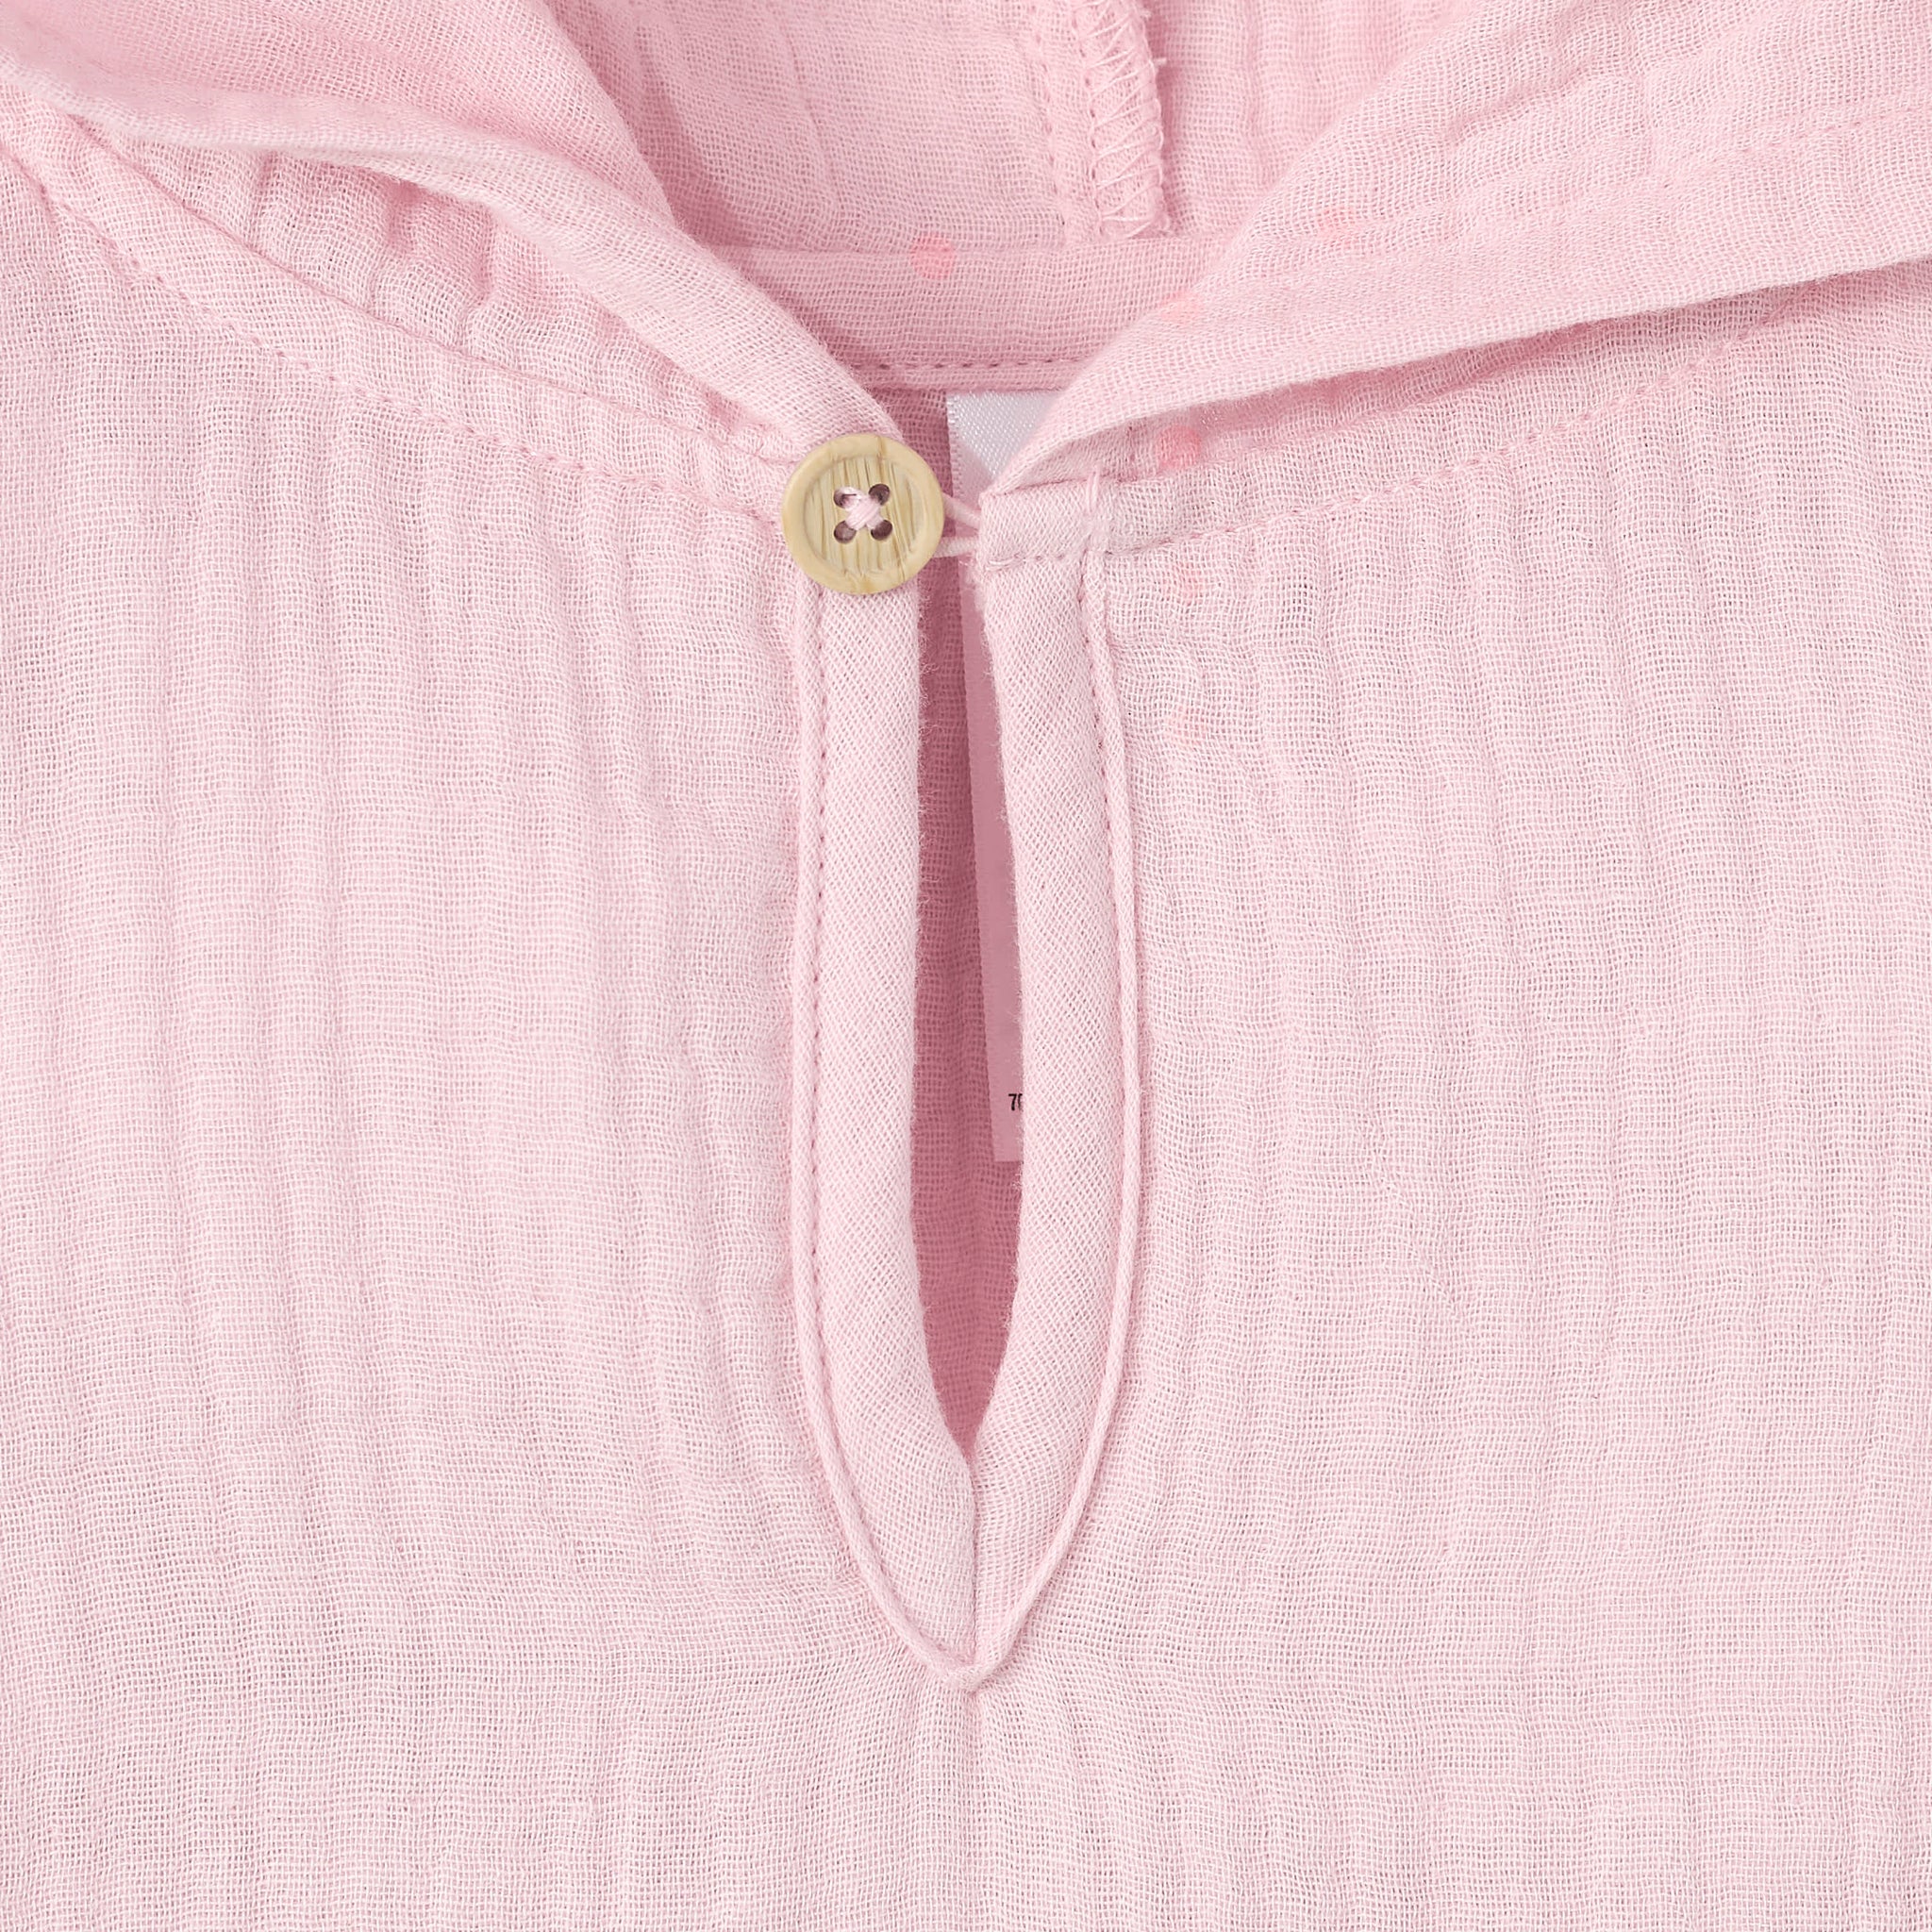 Infant & Toddler Pink Gauze Hoodie-Gerber Childrenswear Wholesale